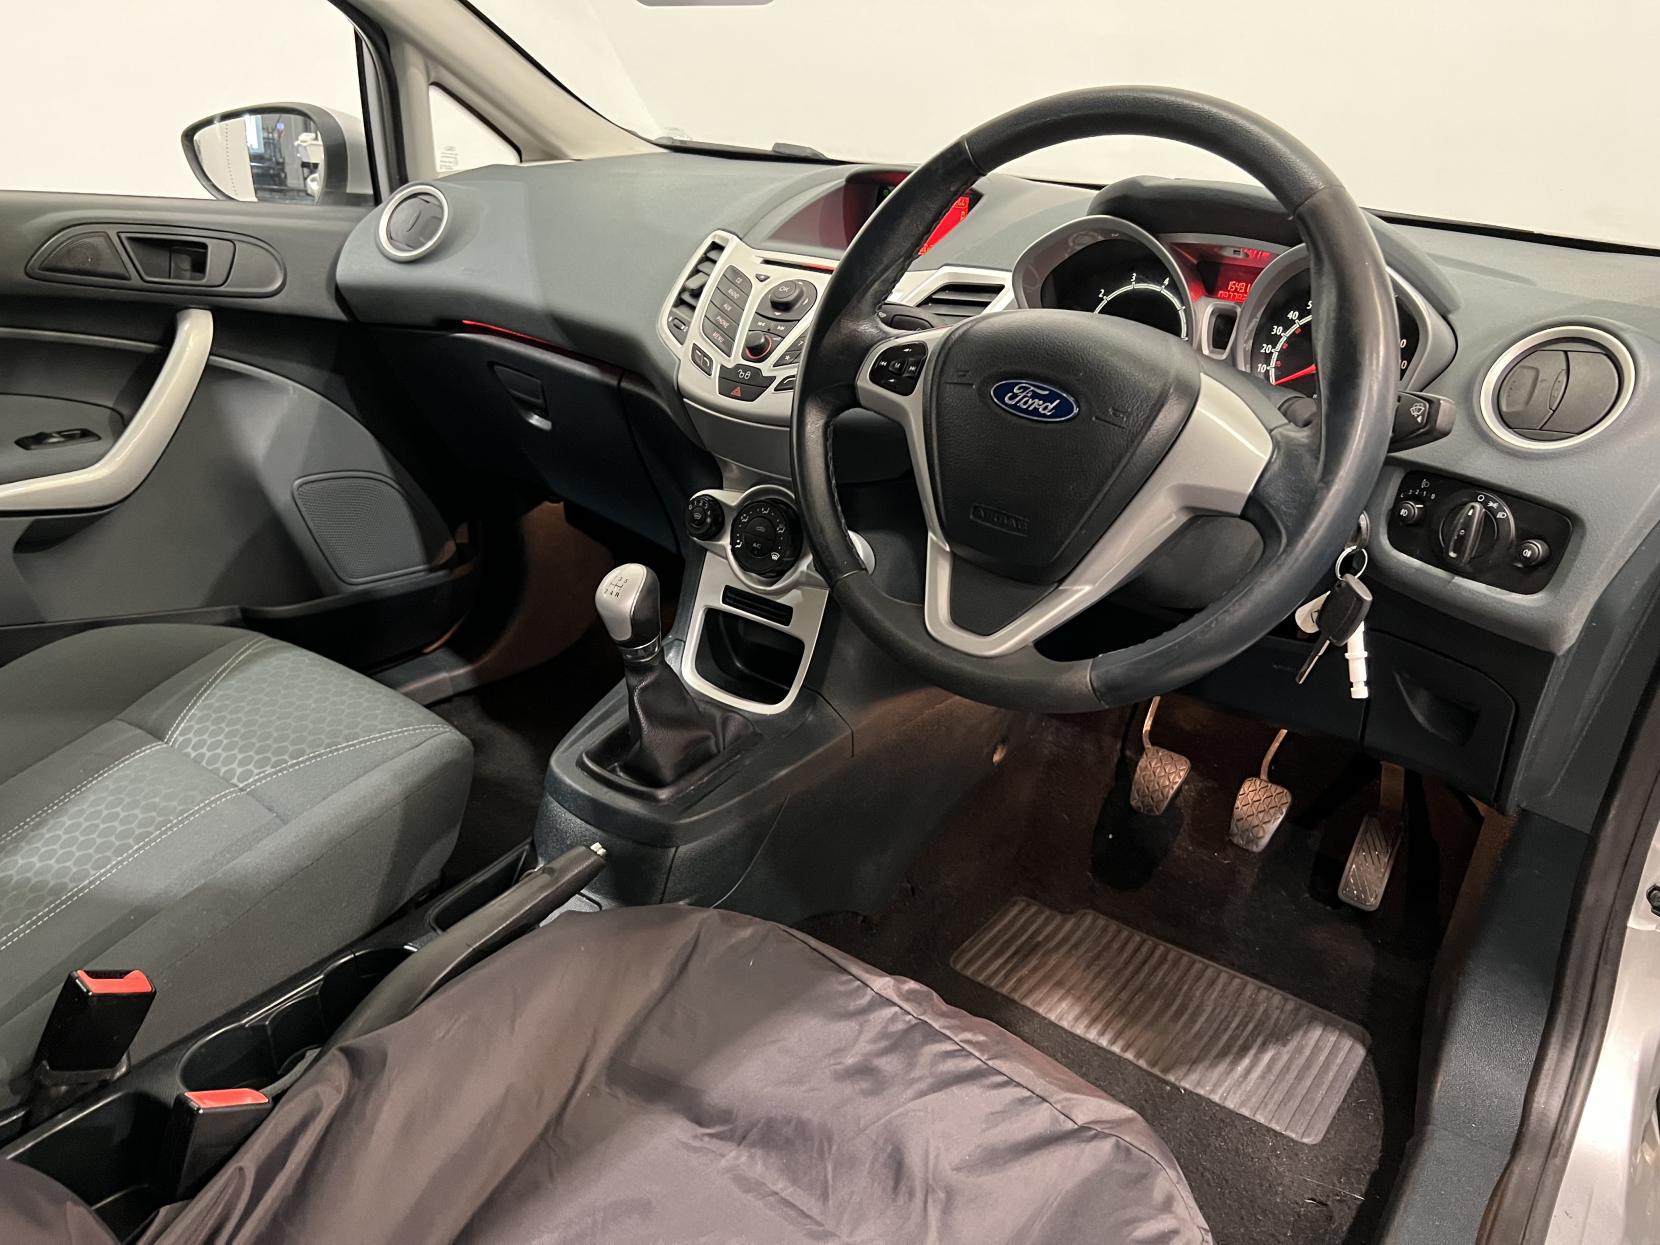 Ford Fiesta 1.25 Zetec Hatchback 3dr Petrol Manual (133 g/km, 81 bhp)